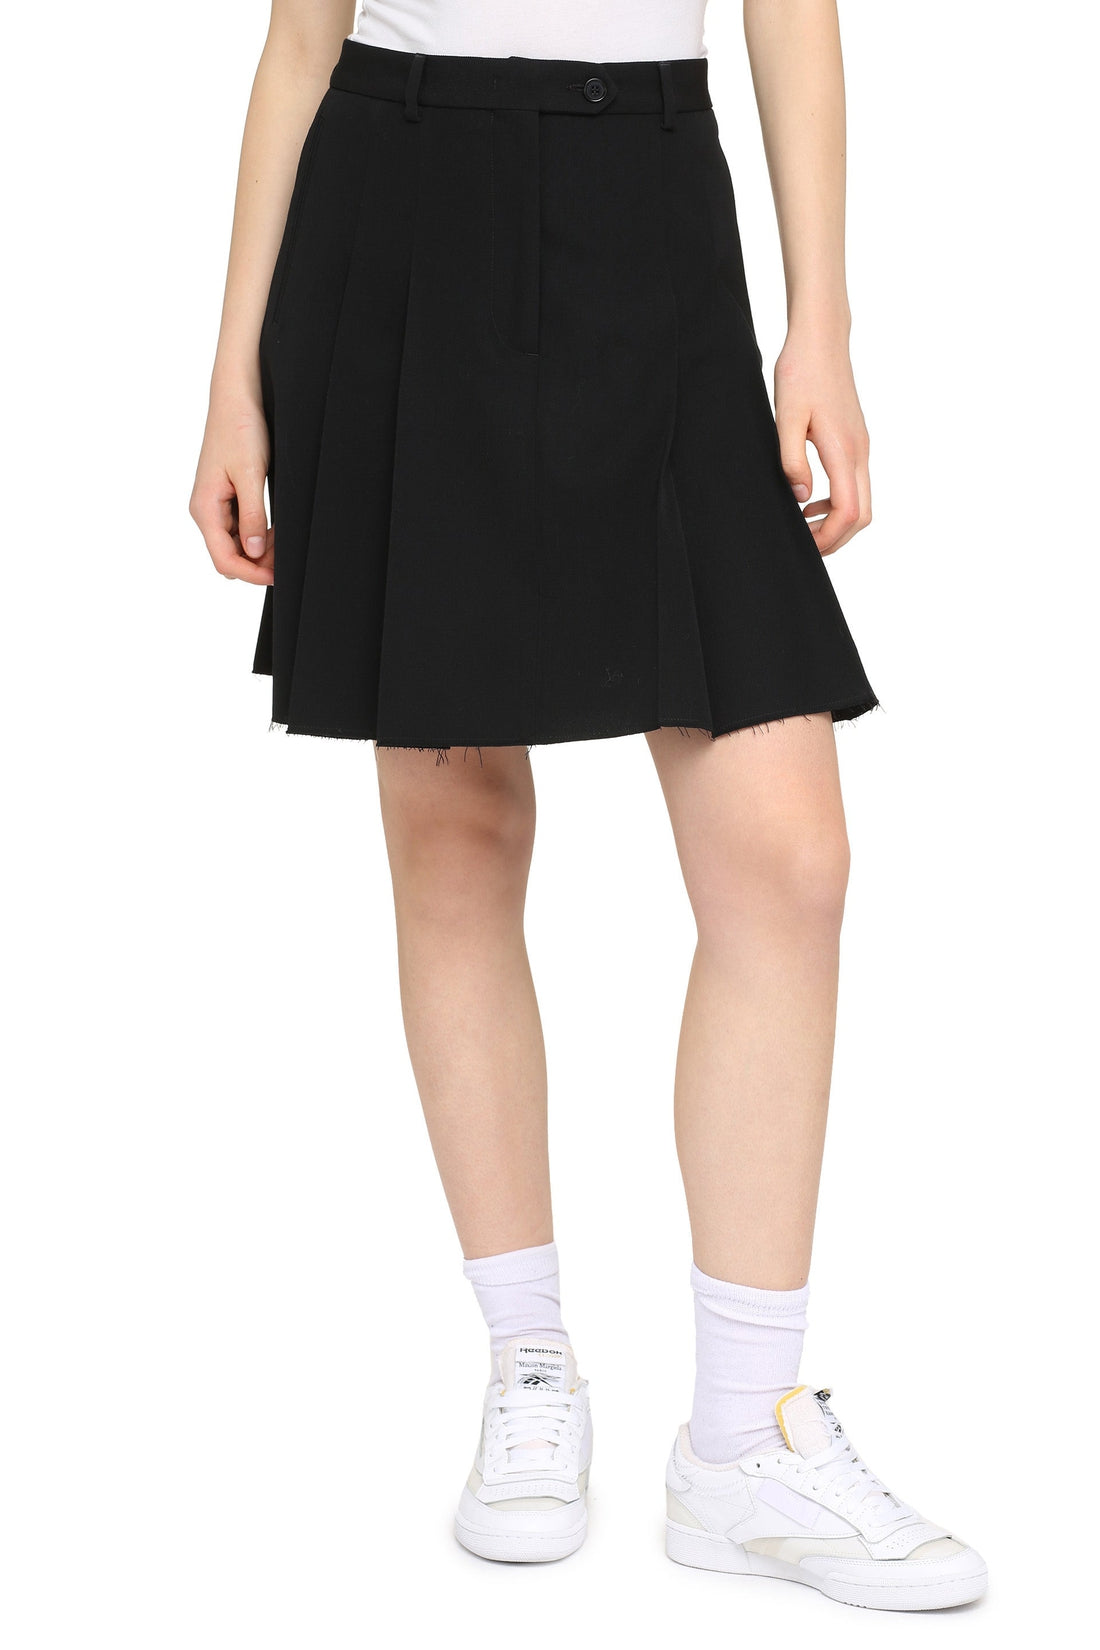 Aspesi-OUTLET-SALE-Wool mini skirt-ARCHIVIST